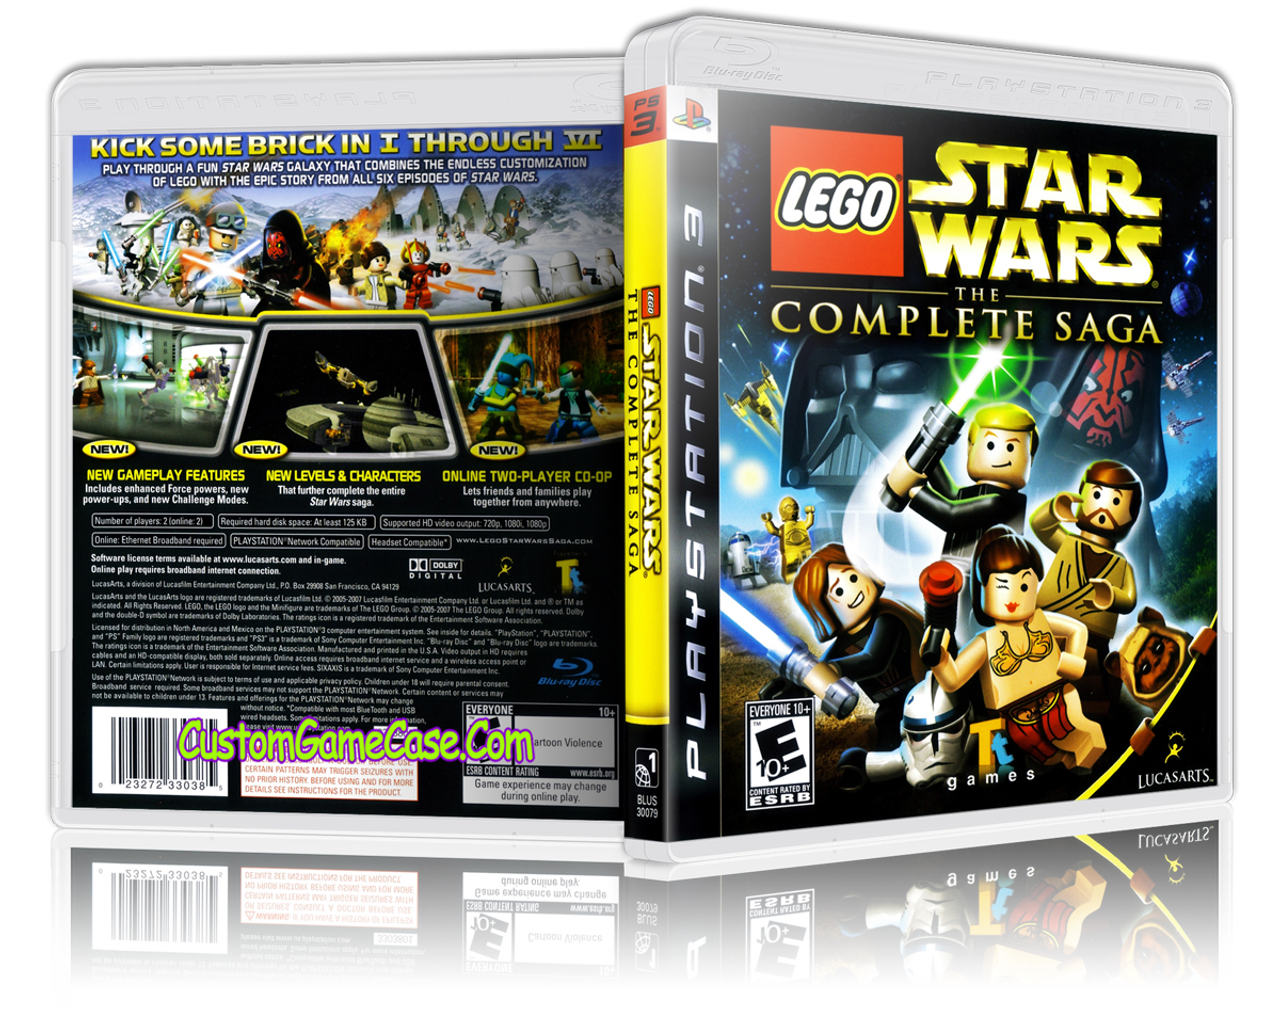 lego star wars the complete saga playstation 3